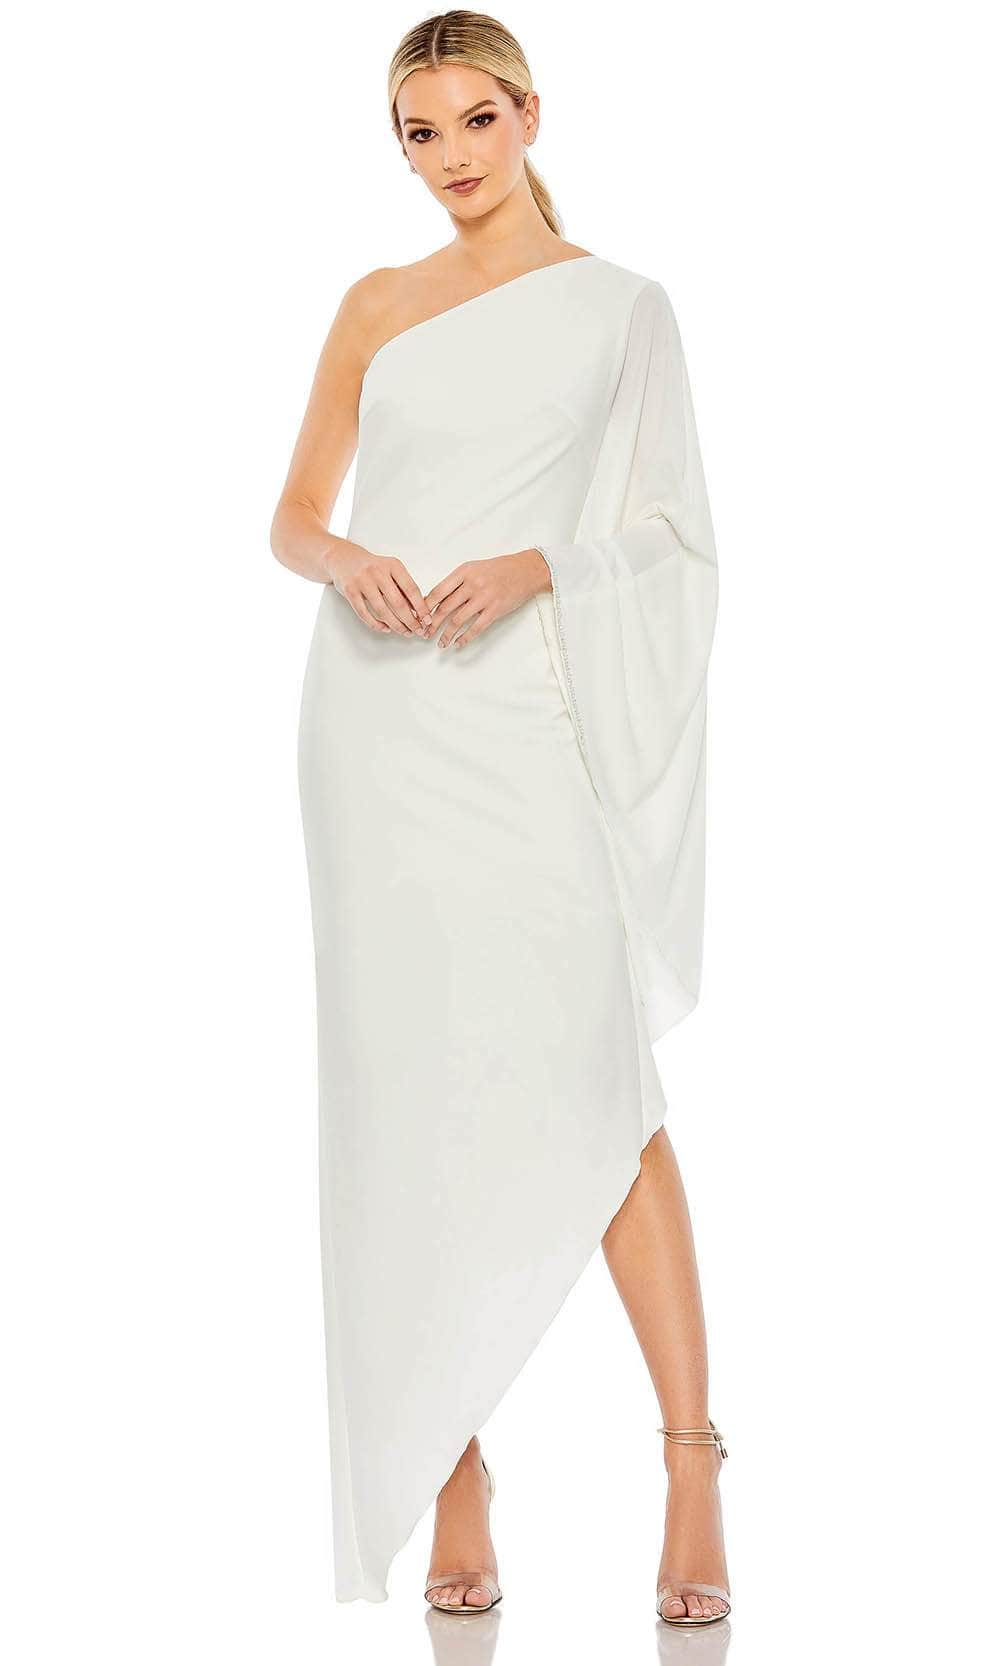 Mac Duggal 11247 - Asymmetrical Hem Sheath Cocktail Dress Special Occasion Dress 2 / Ivory